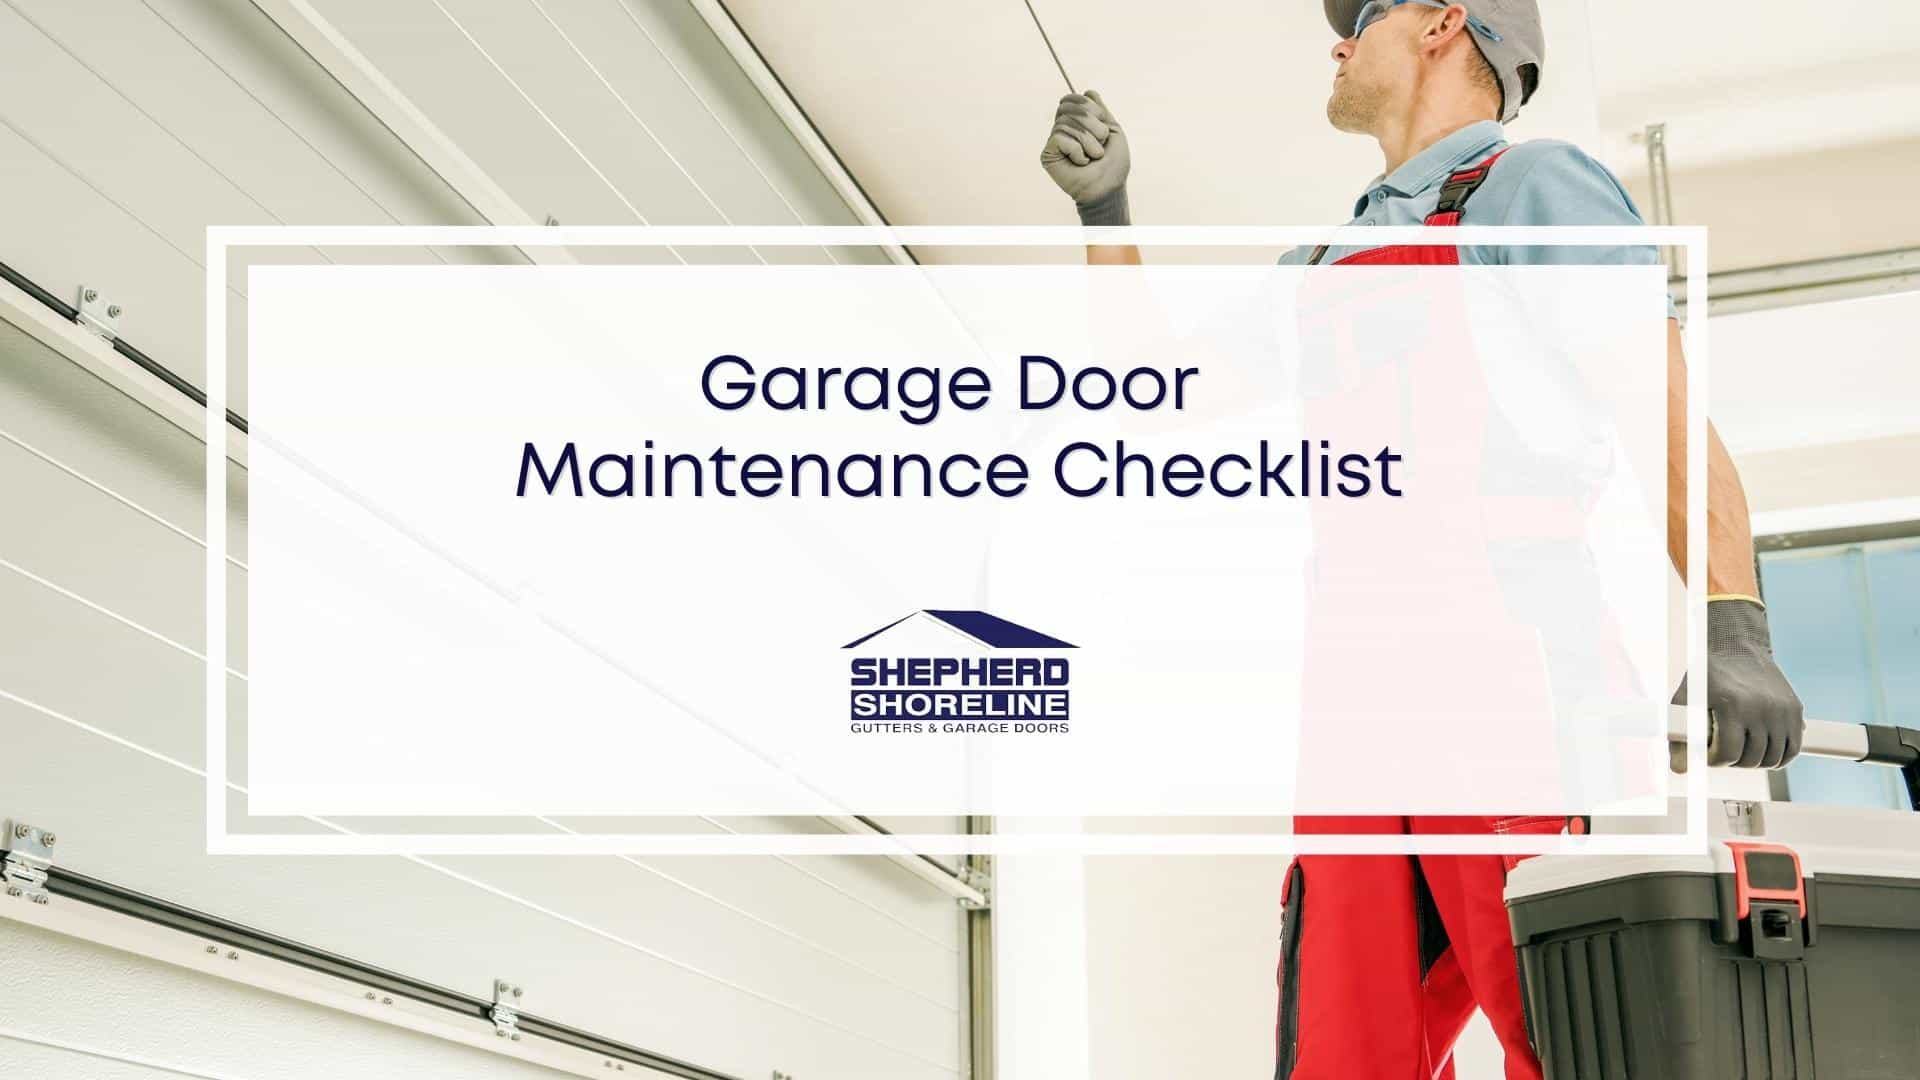 Featured image of garage door maintenance checklist